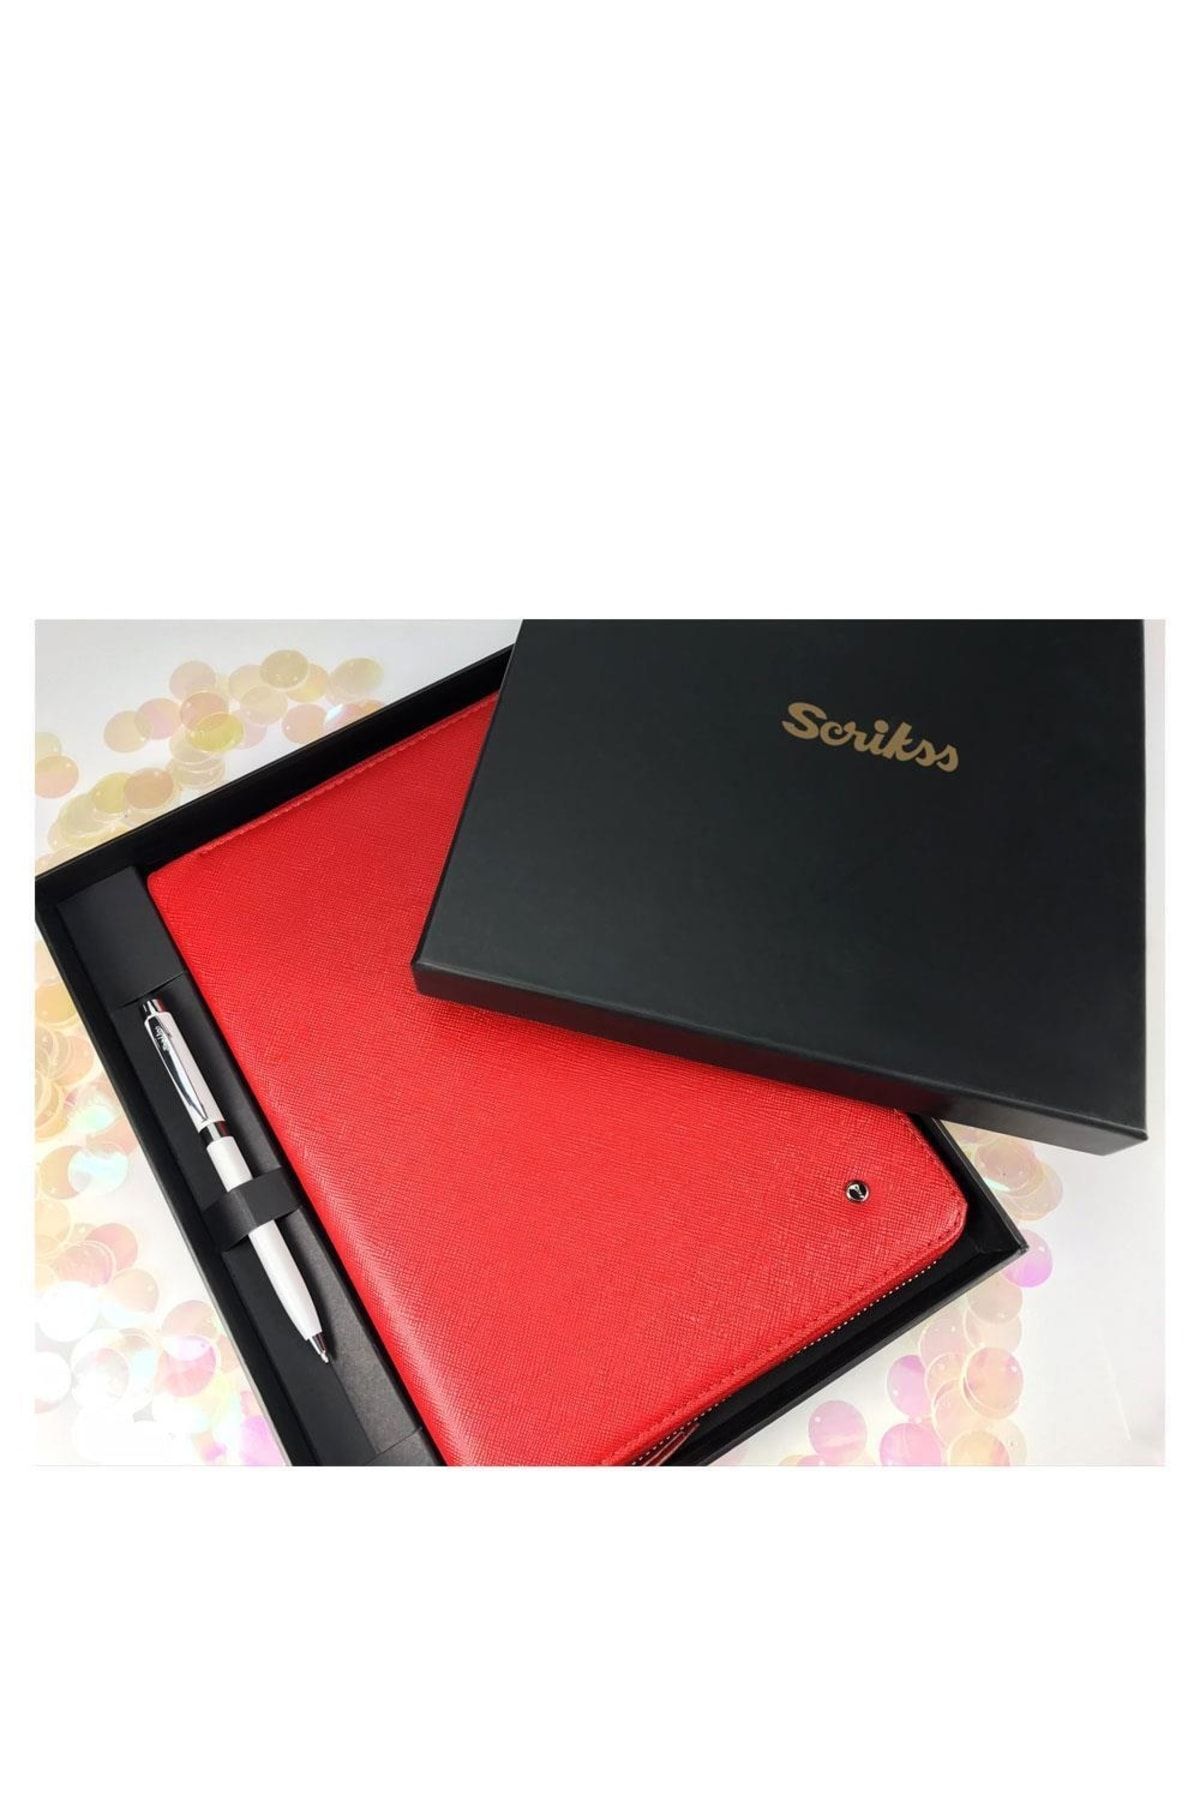 Scrikss Mini Portföy Tablet Kılıfı Kırmızı Dr8113 -